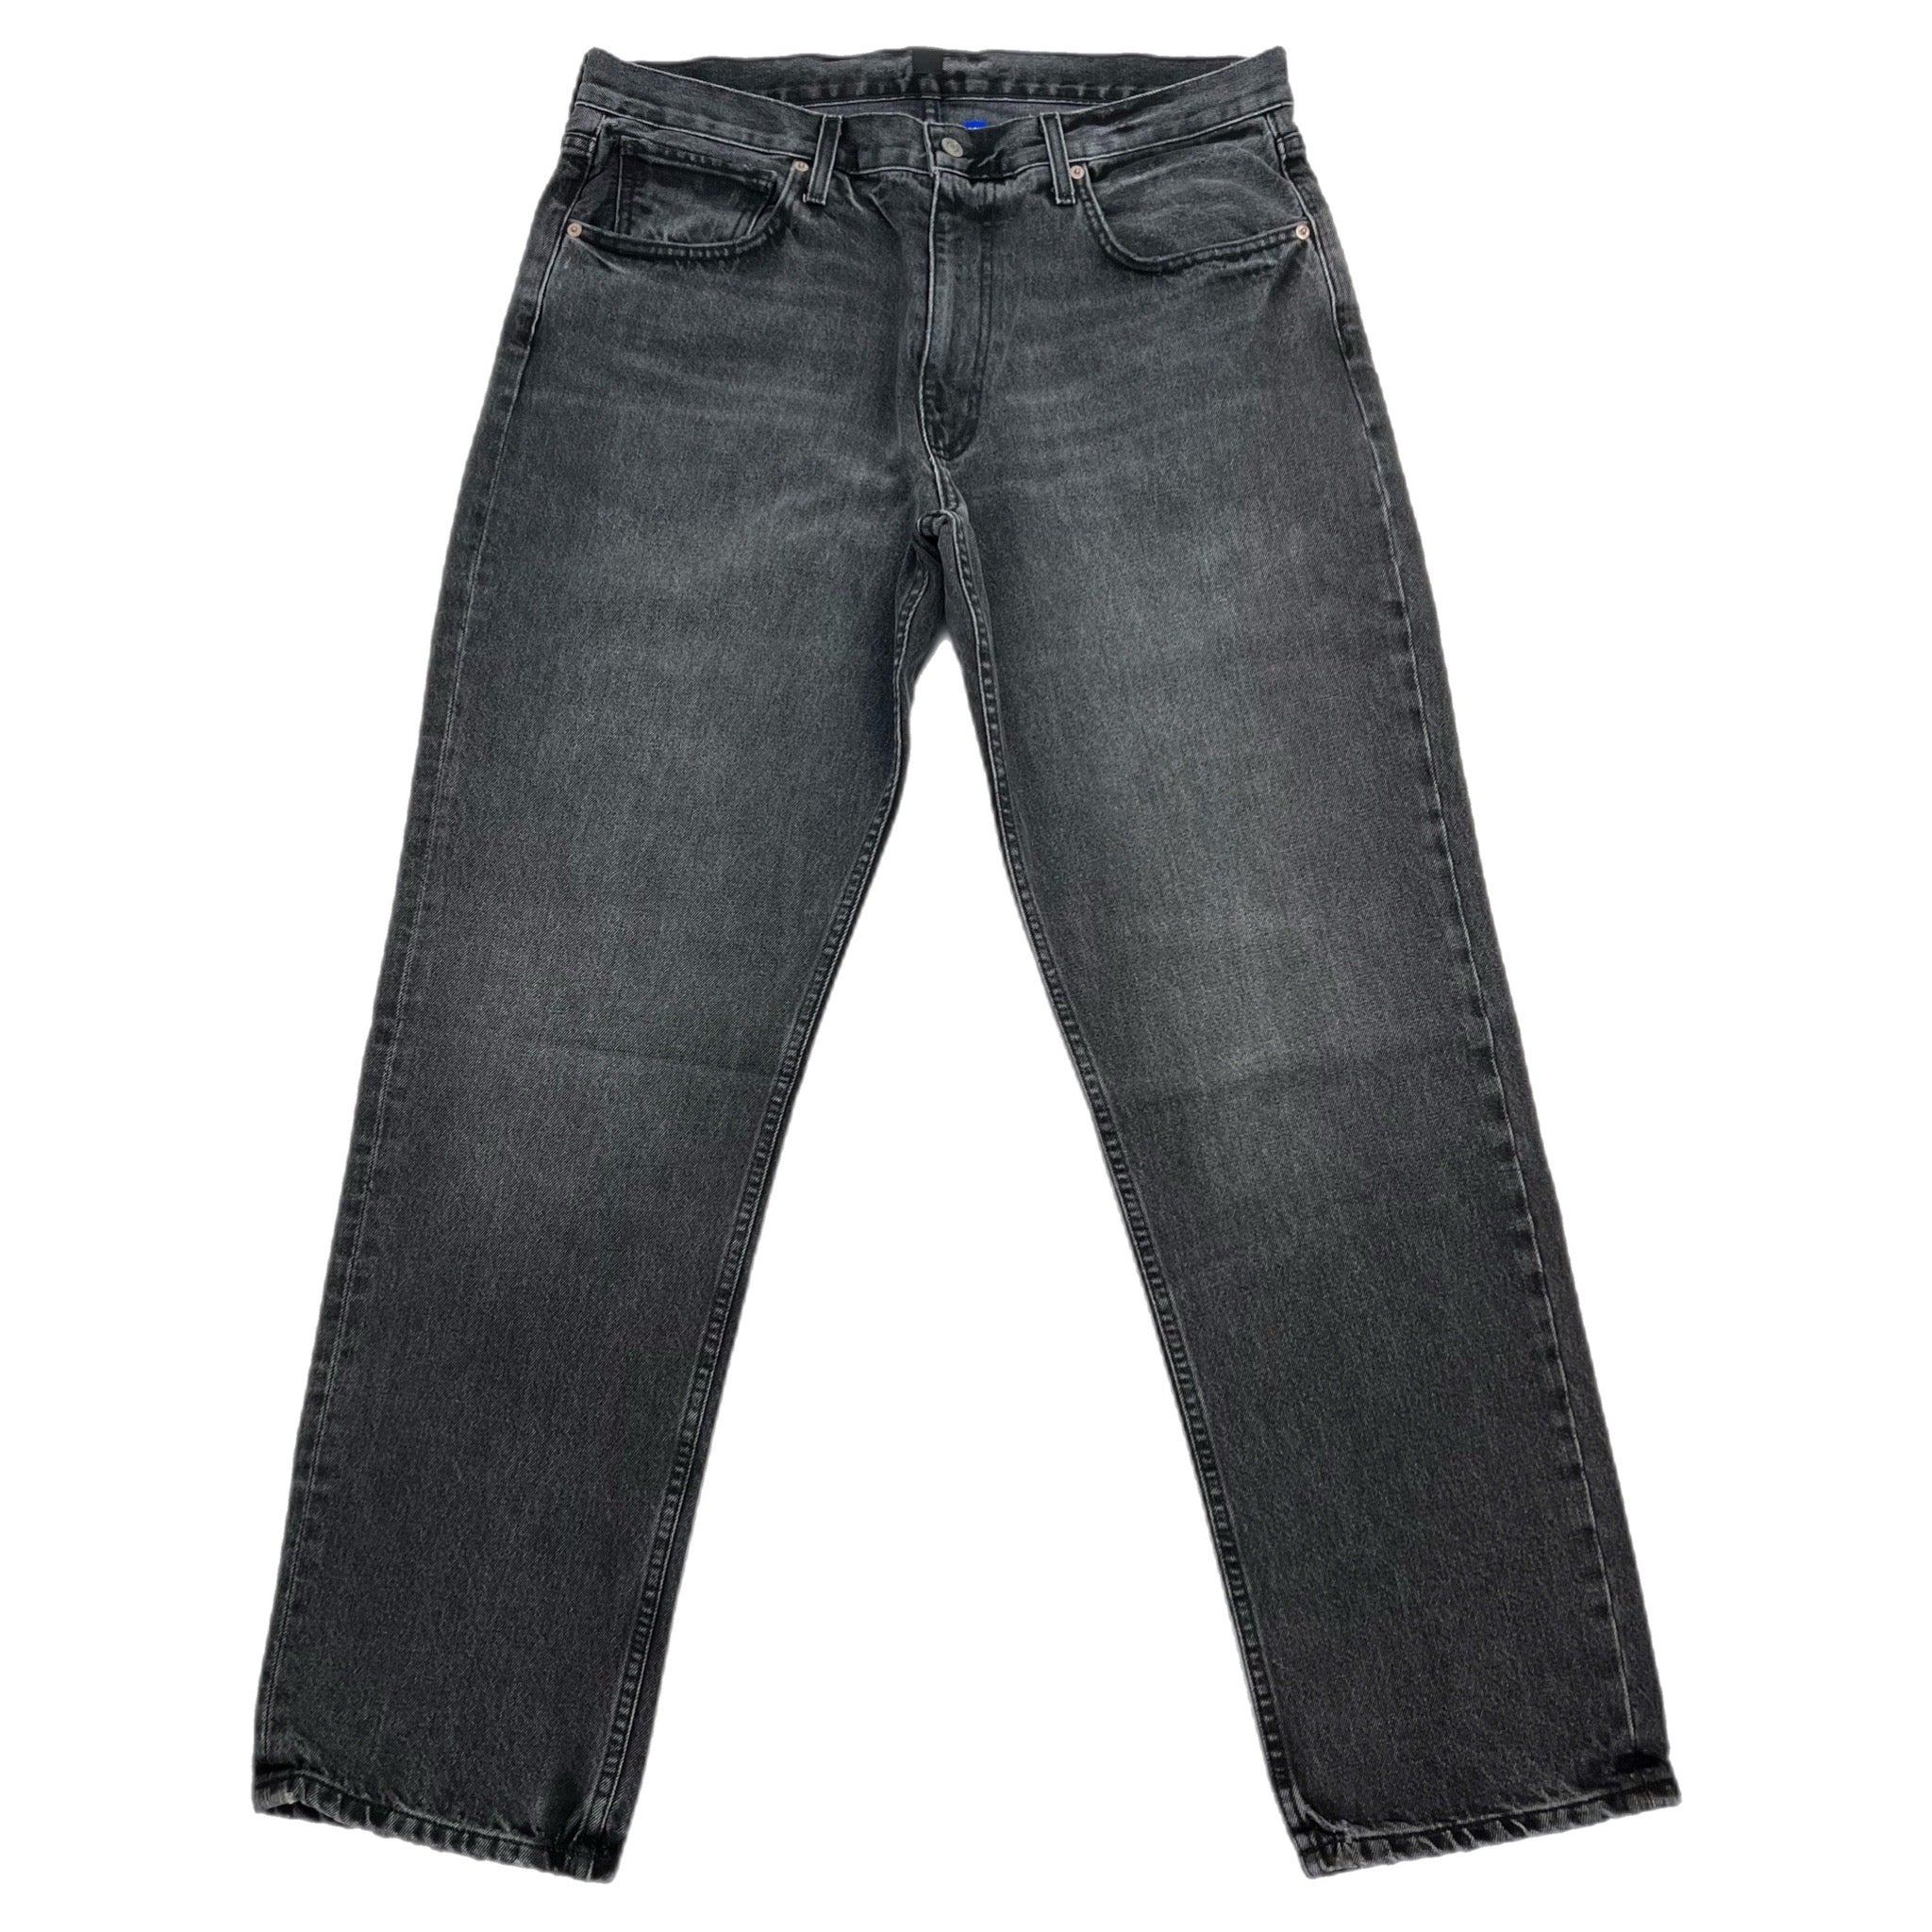 Yeezy Gap Engineered by Balenciaga 5 Pocket Denim Pants Grey Wash